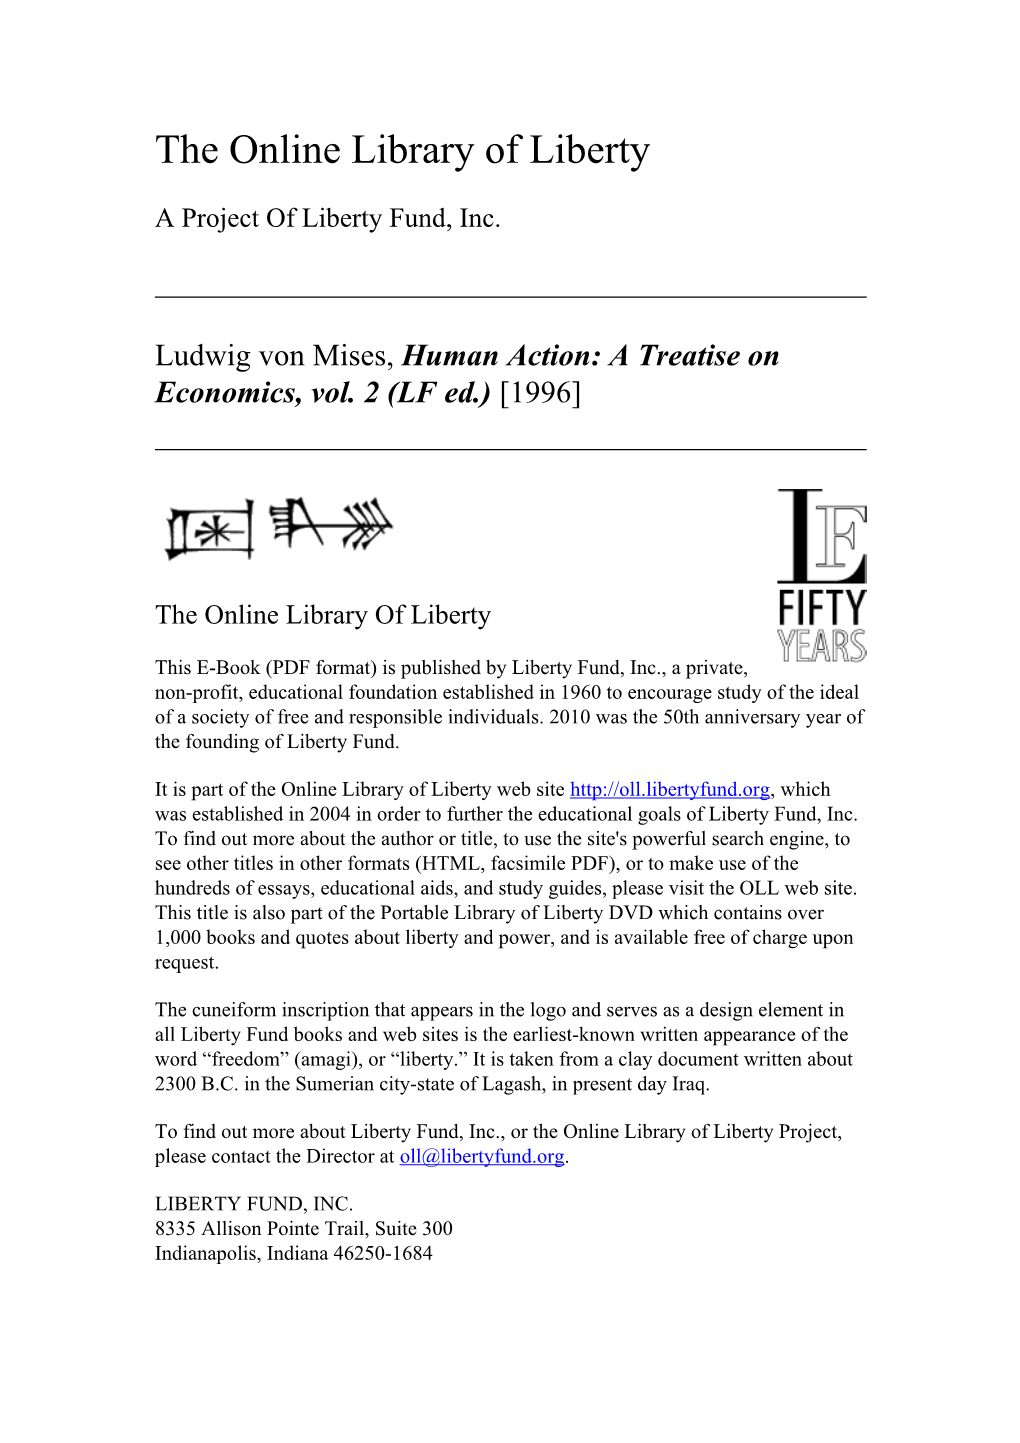 A Treatise on Economics, Vol. 2 (LF Ed.) [1996]